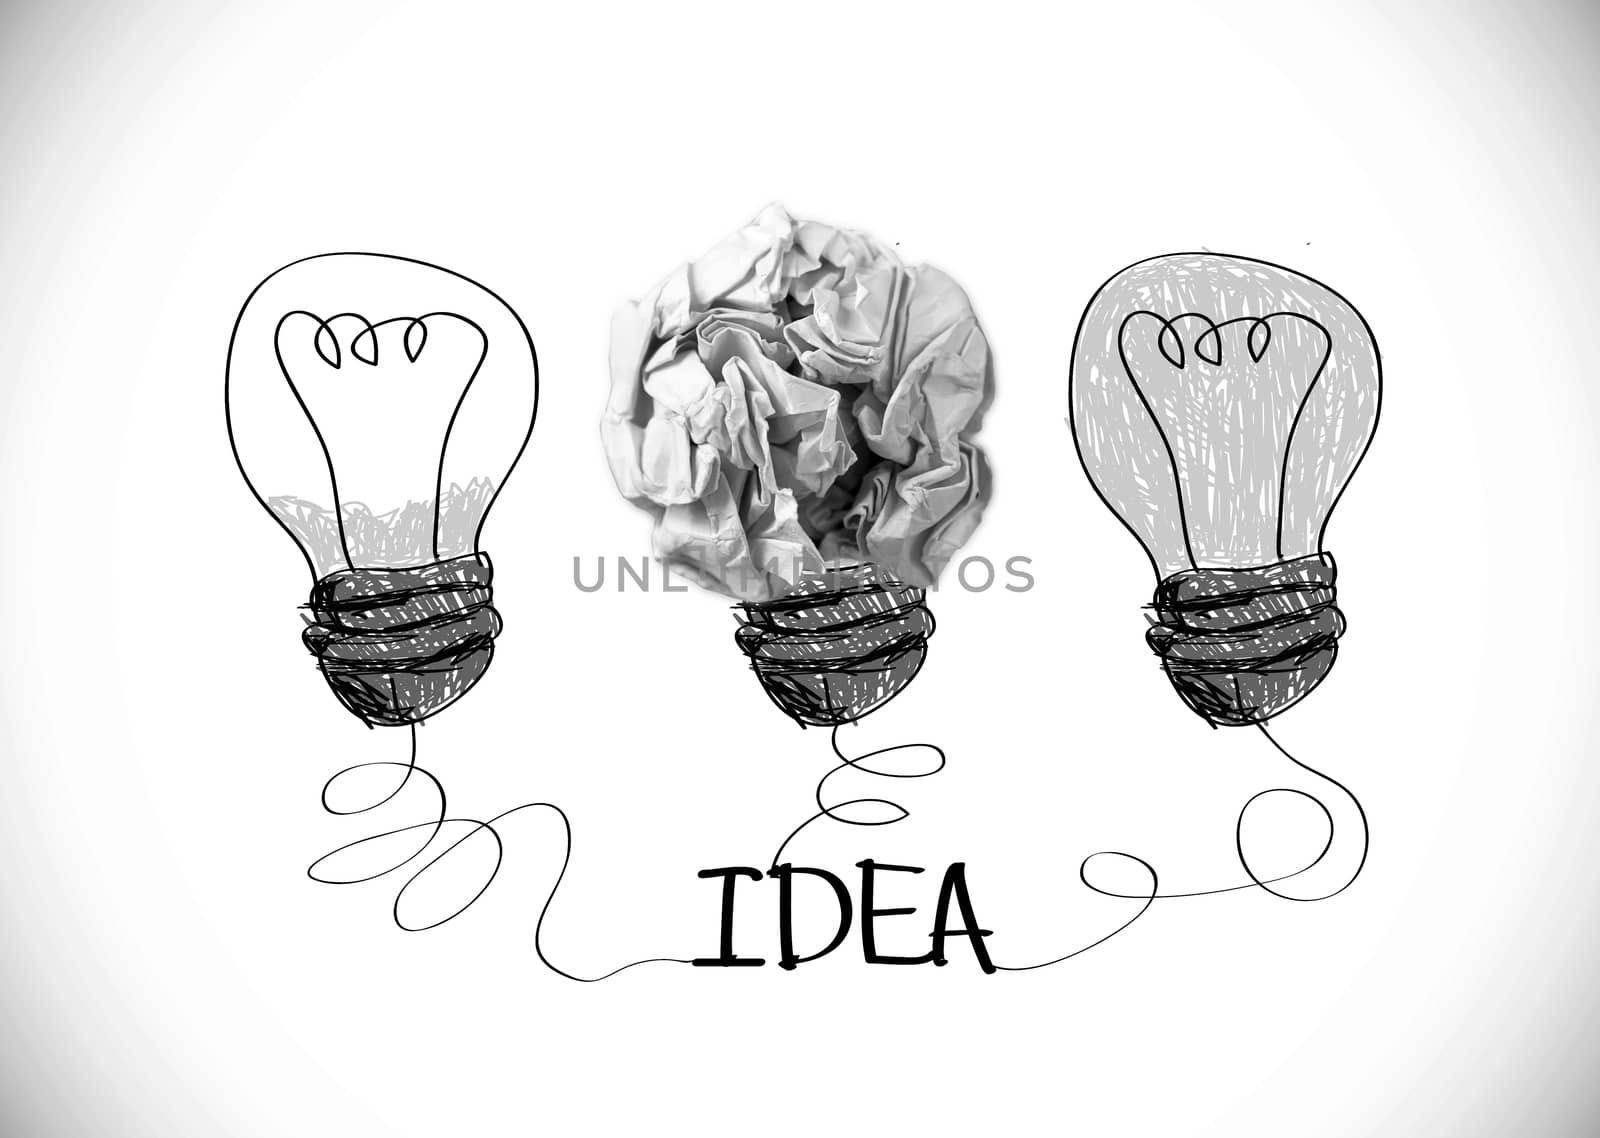 idea Light bulb vector icon